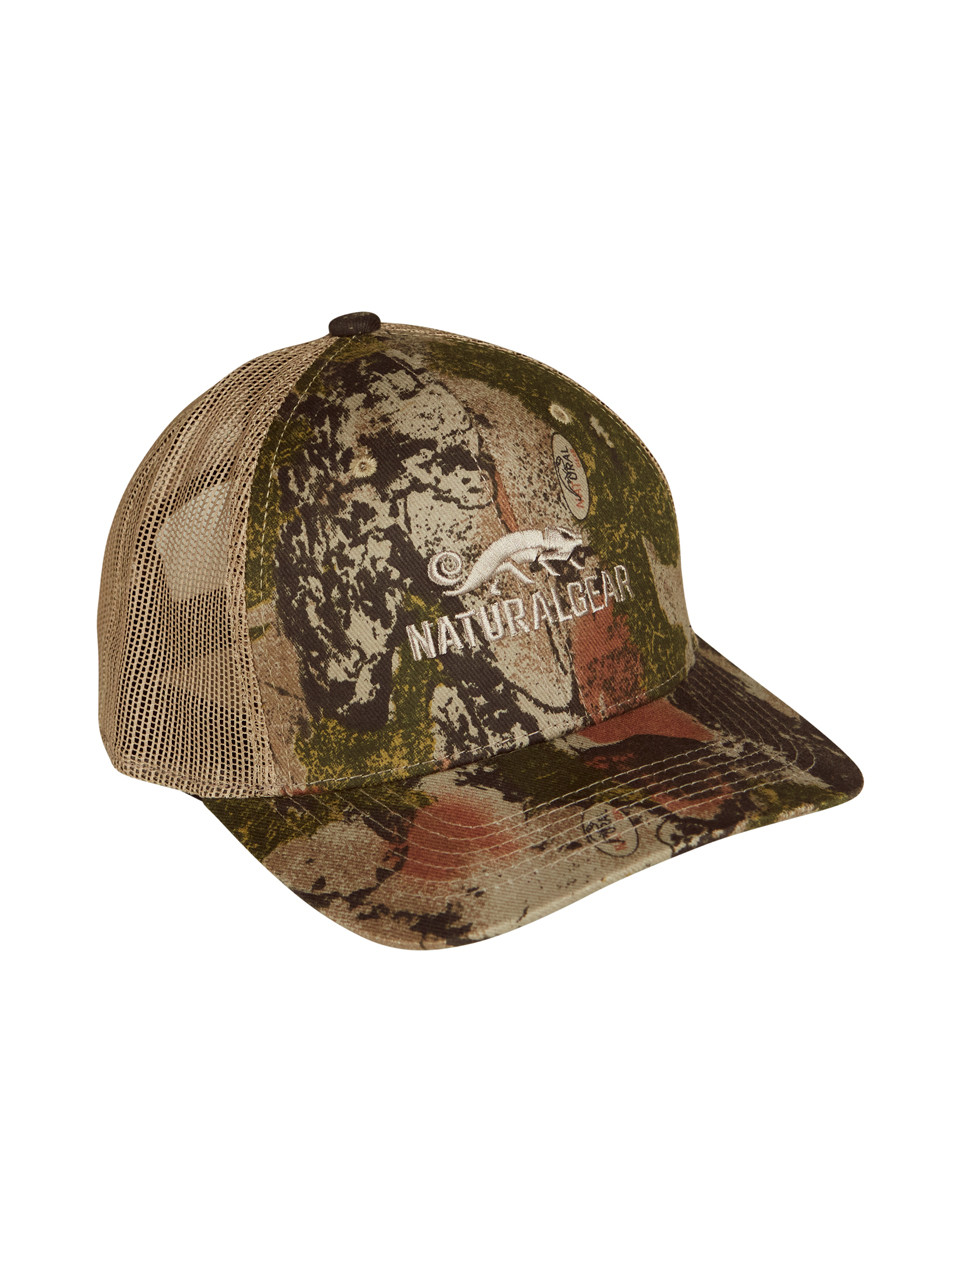 Men's Hunting Fishing Hat Camo Series Adjustable Mesh Ball Cap